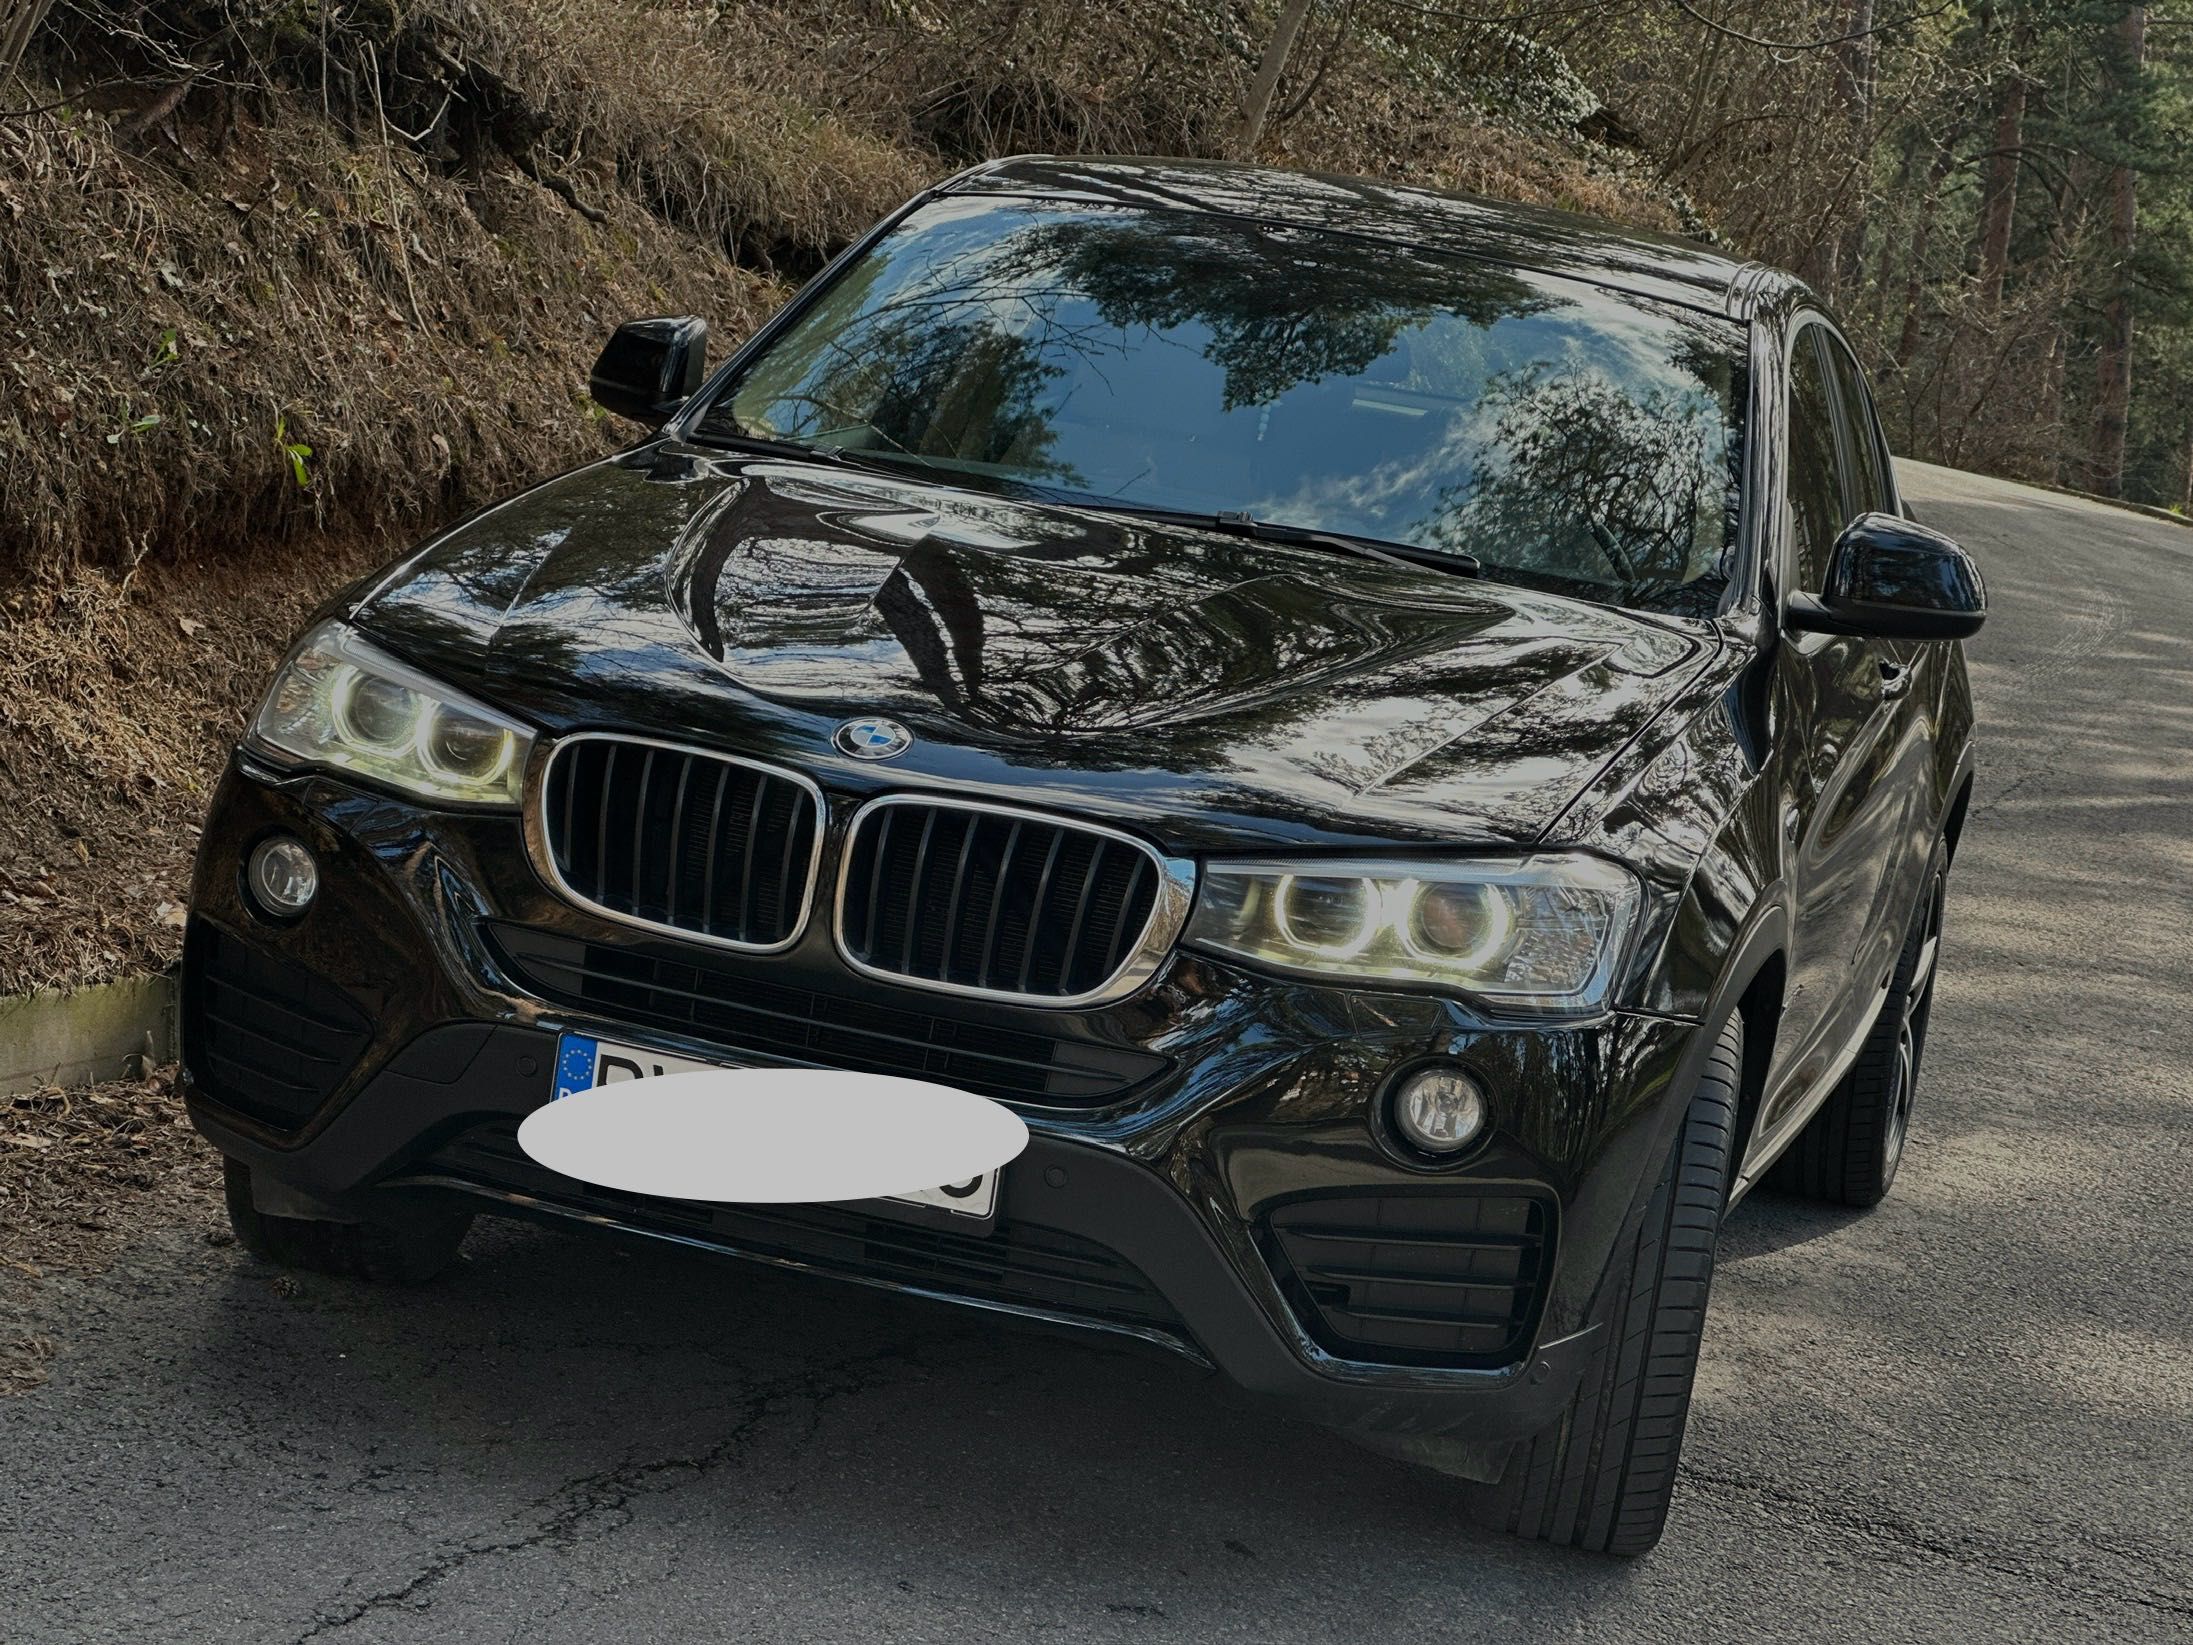 Vand BMW x4 stare excelentă.